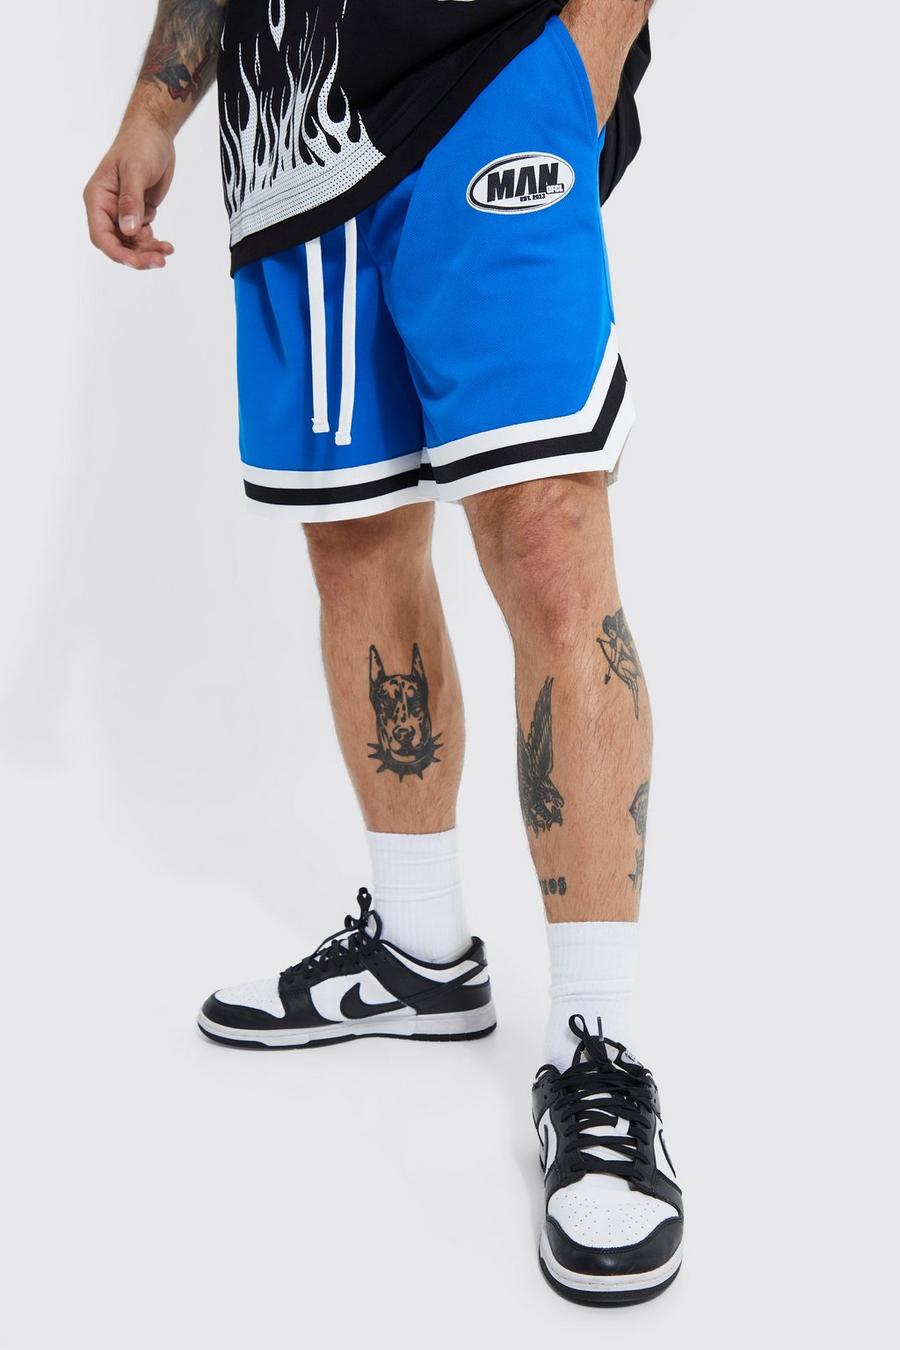 Cobalt blue Short Length Mesh Basketball Shorts